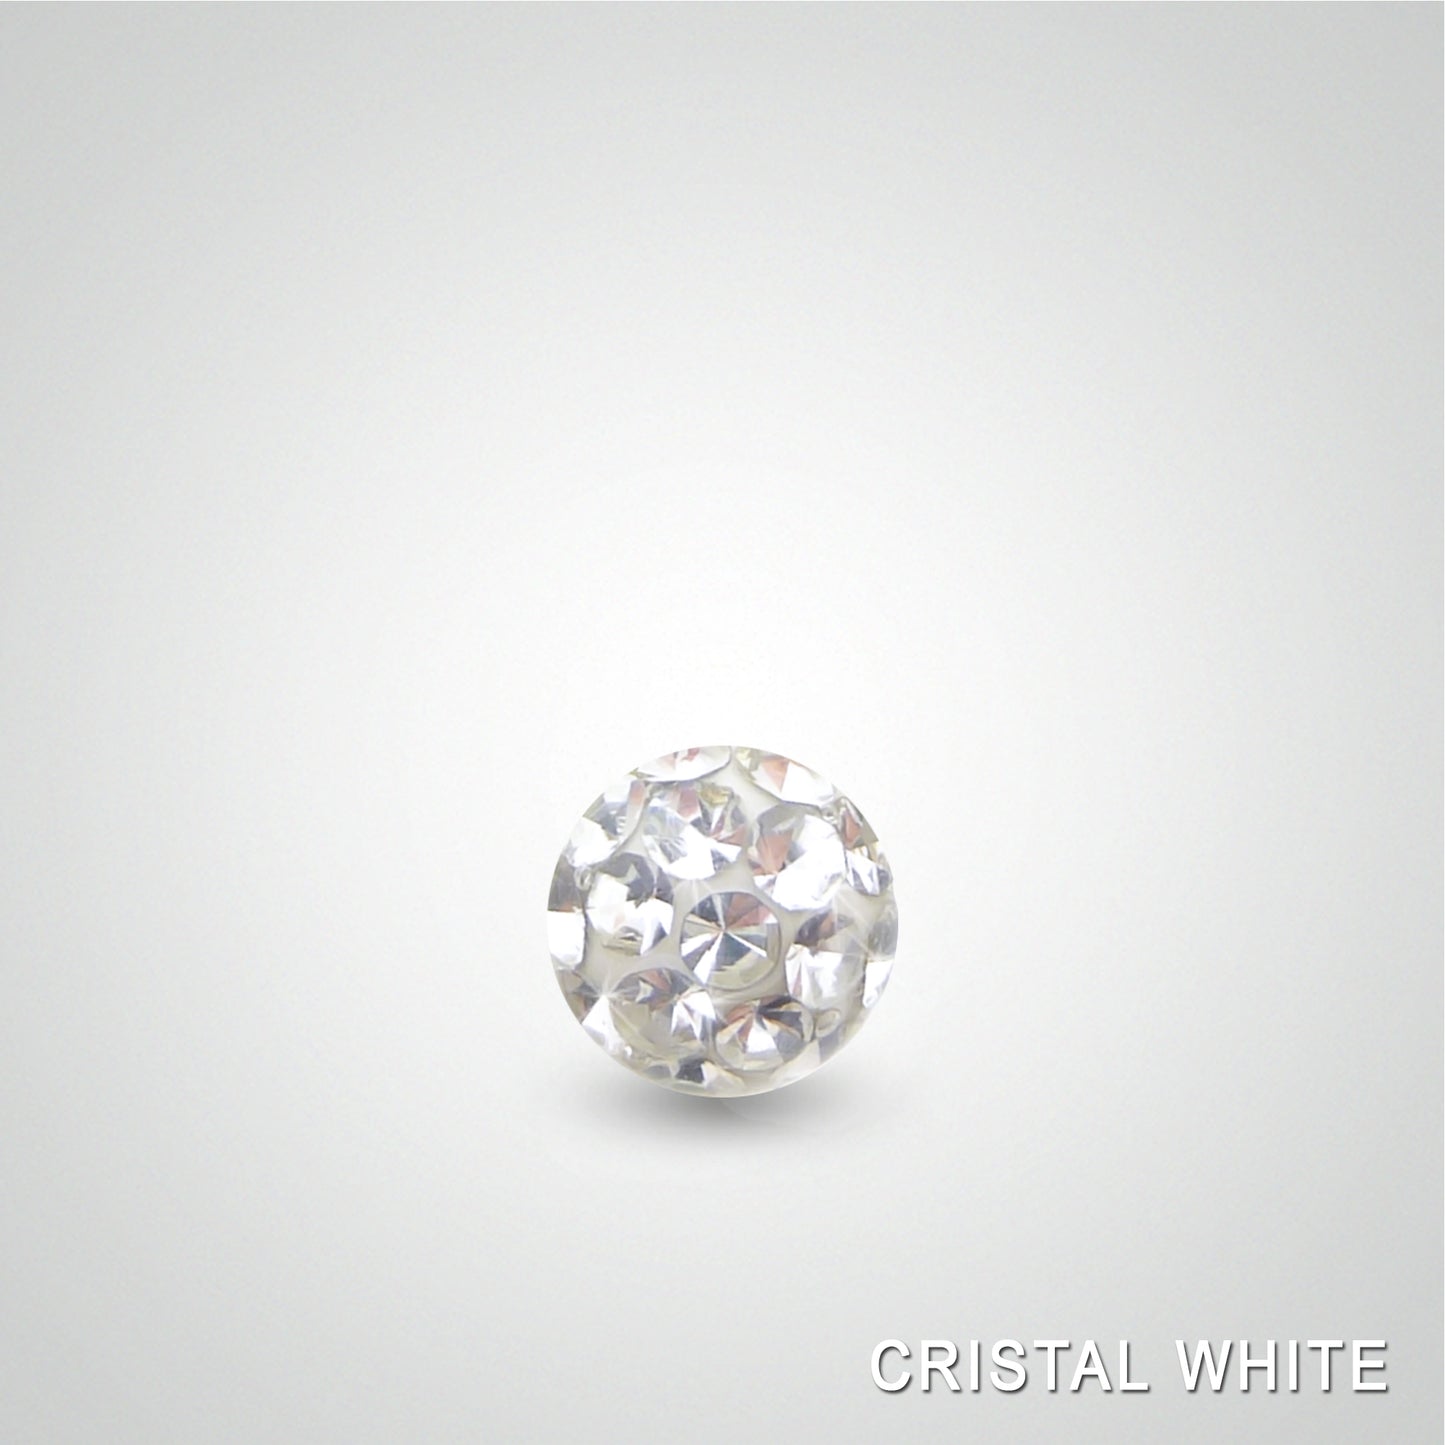 Cristal white